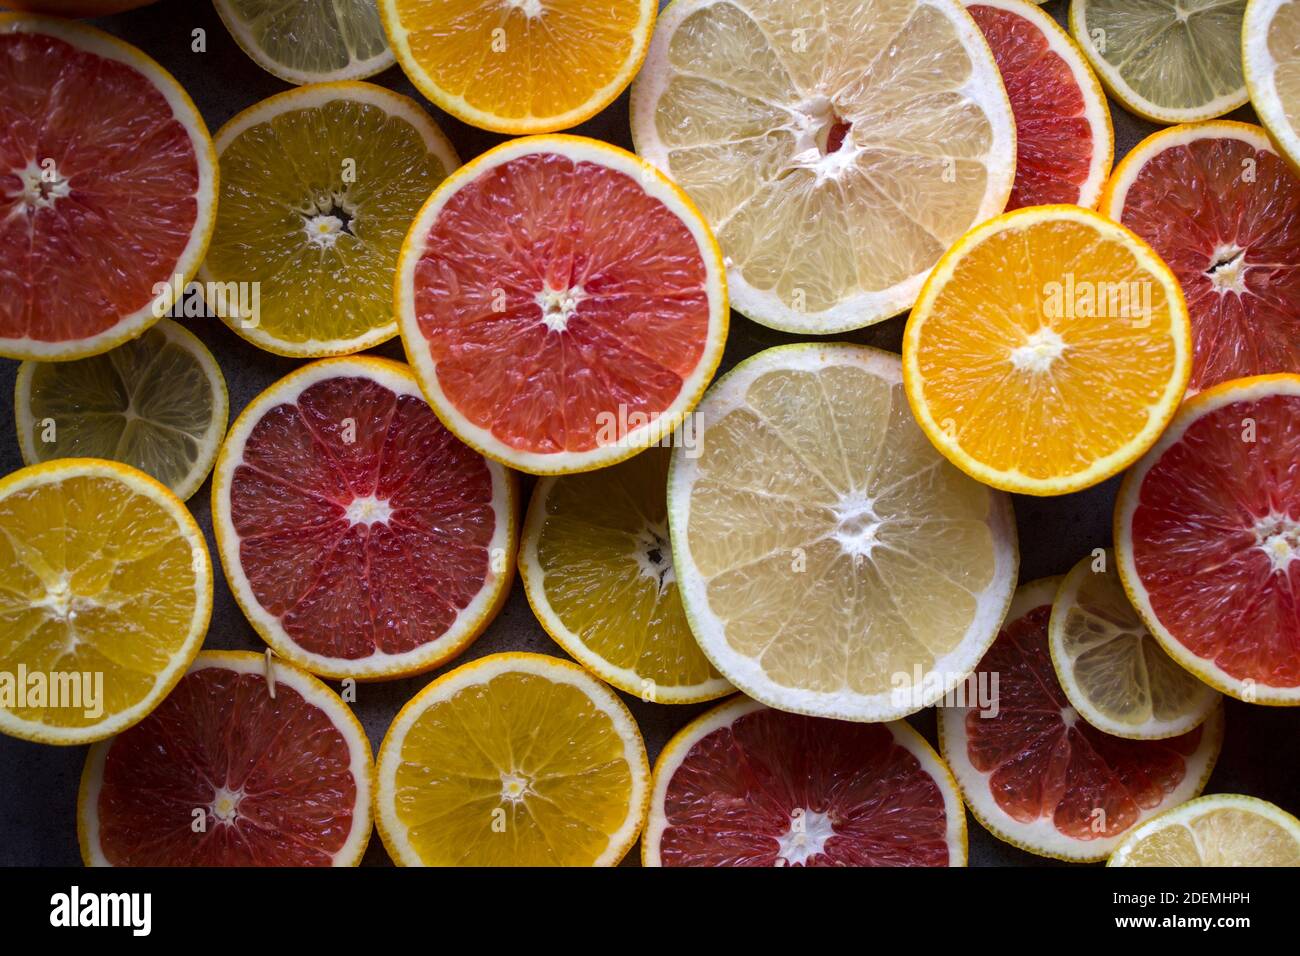 Red orange fruit circles on dark gray background. Citrus texture close up. Juicy oranges top view photo. Stock Photo